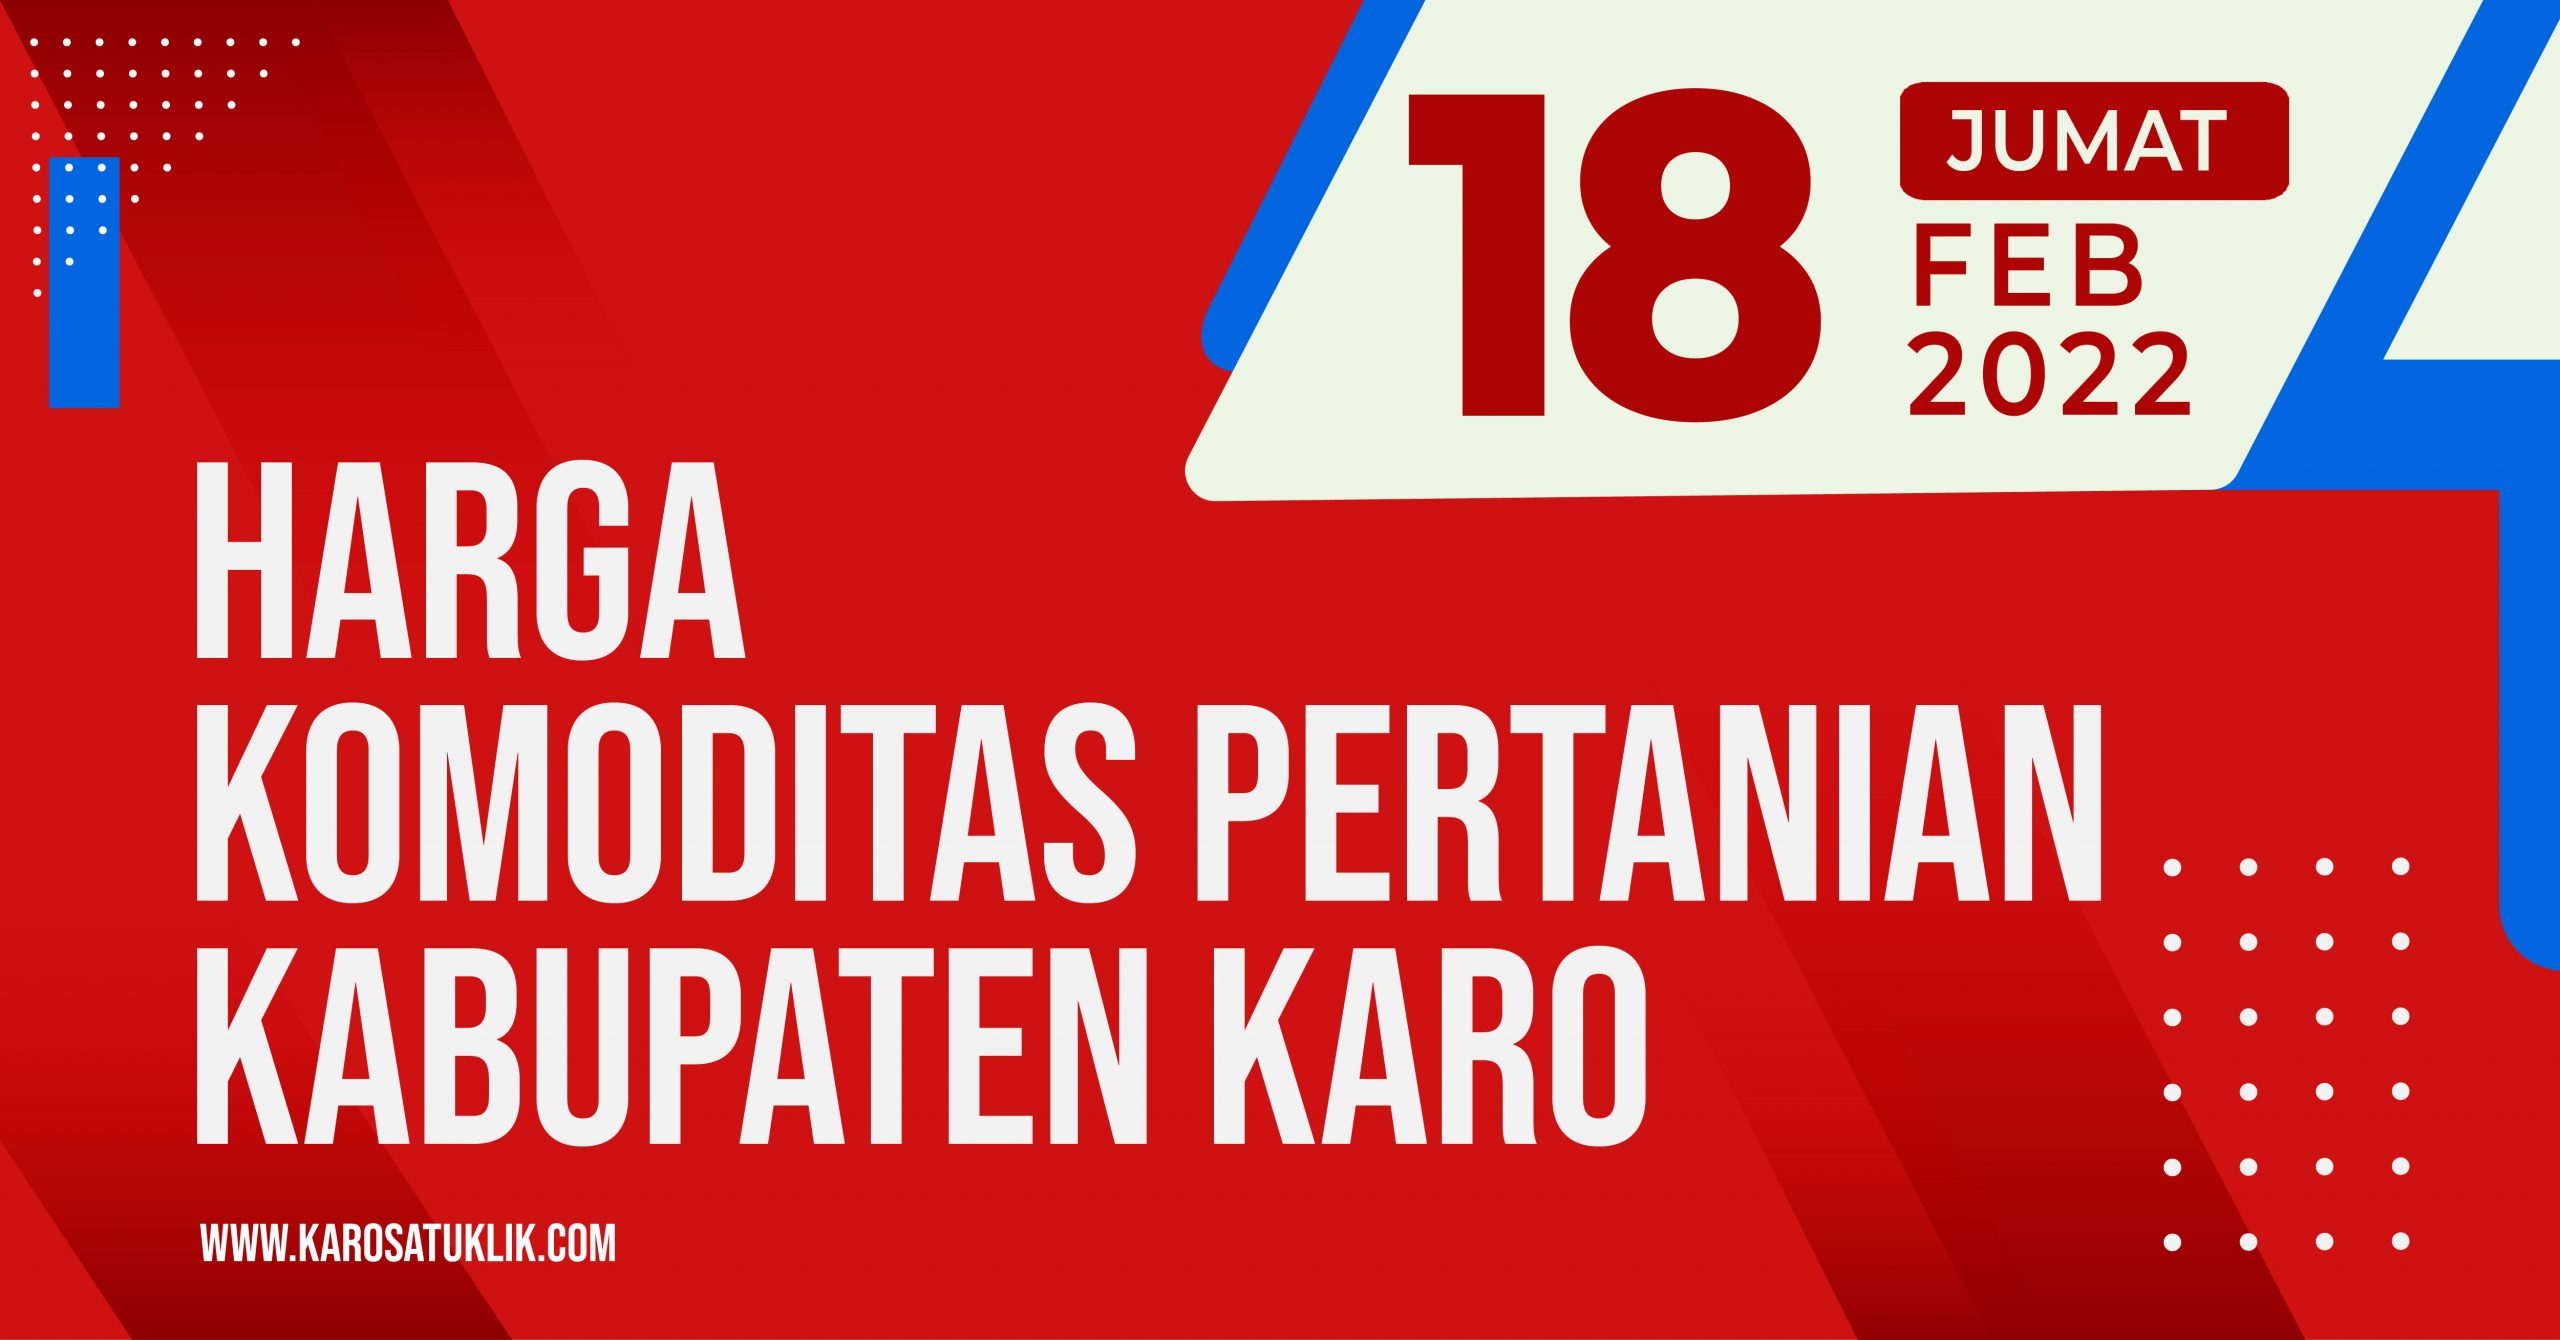 Daftar Harga Komoditas Pertanian Kabupaten Karo, 18 Februari 2022